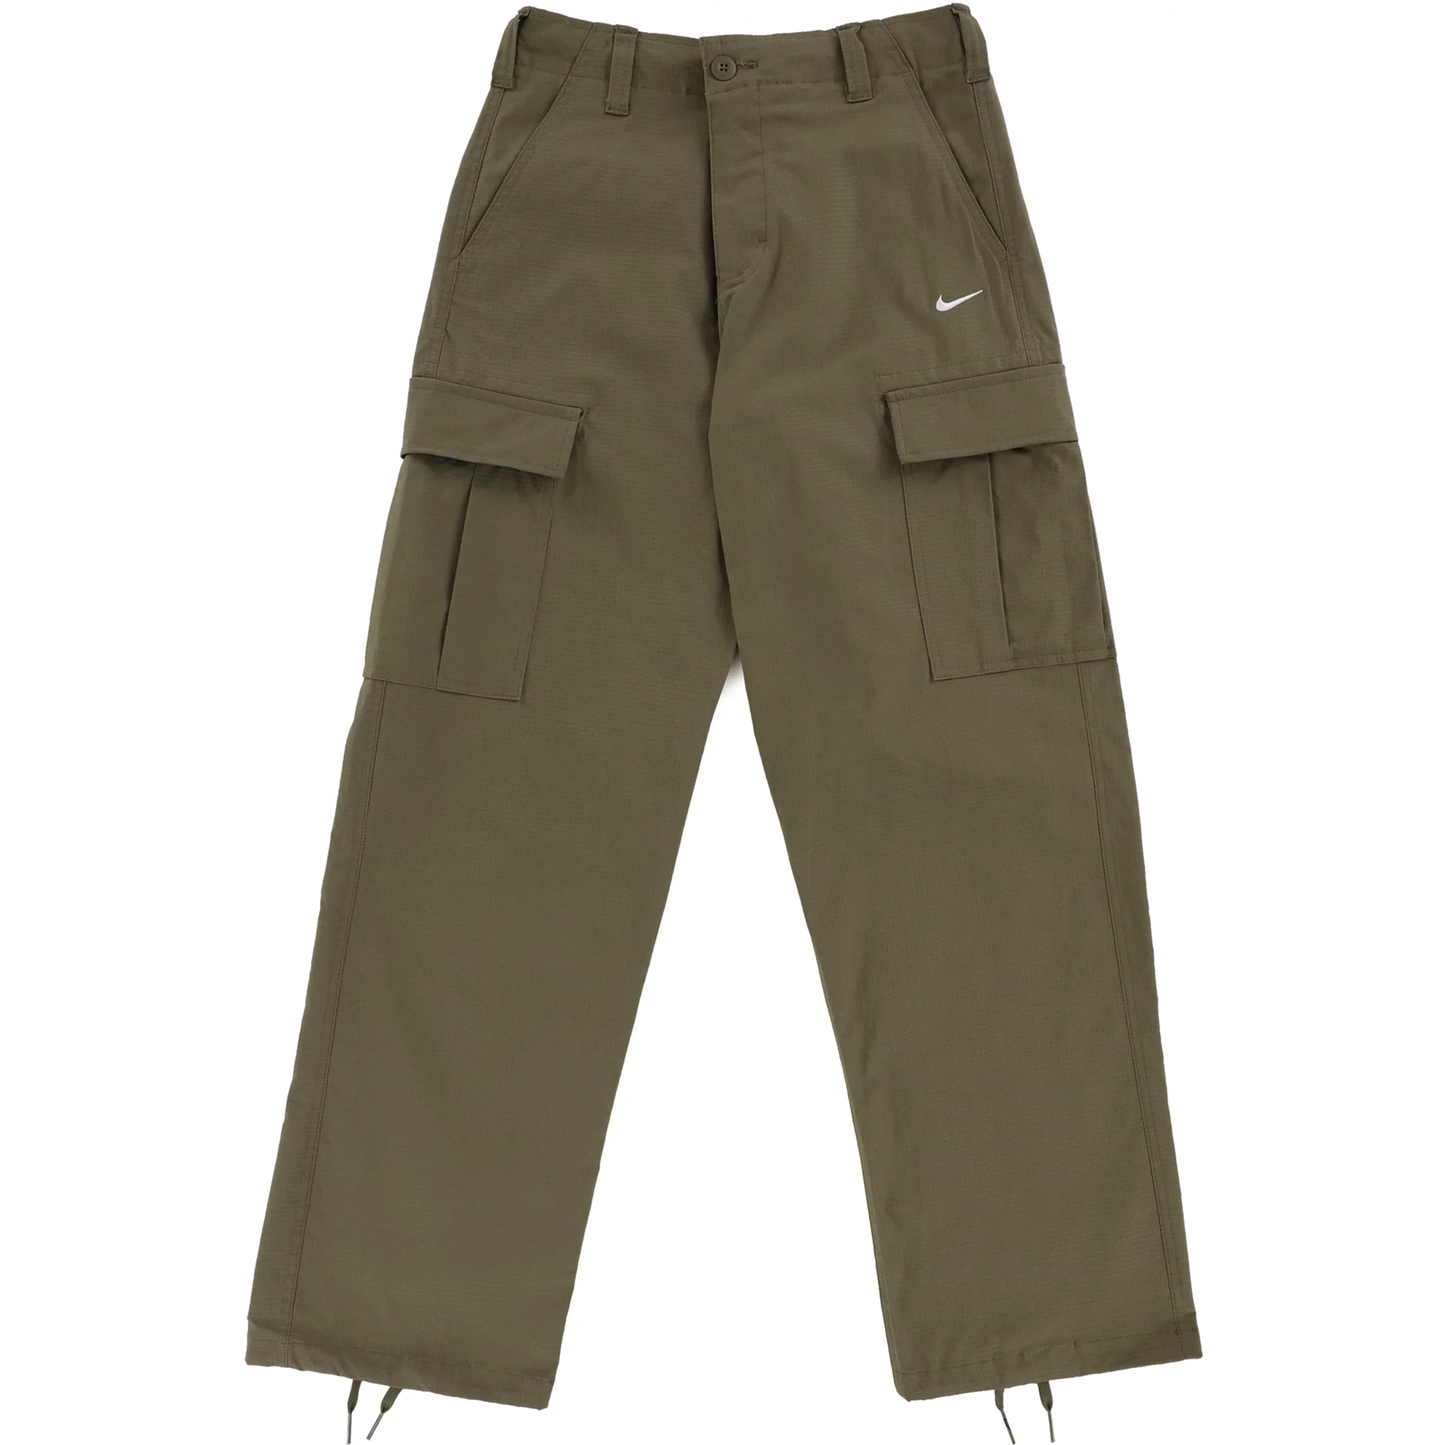 Nike SB Kearny Cargo Ripstop Pants - Olive